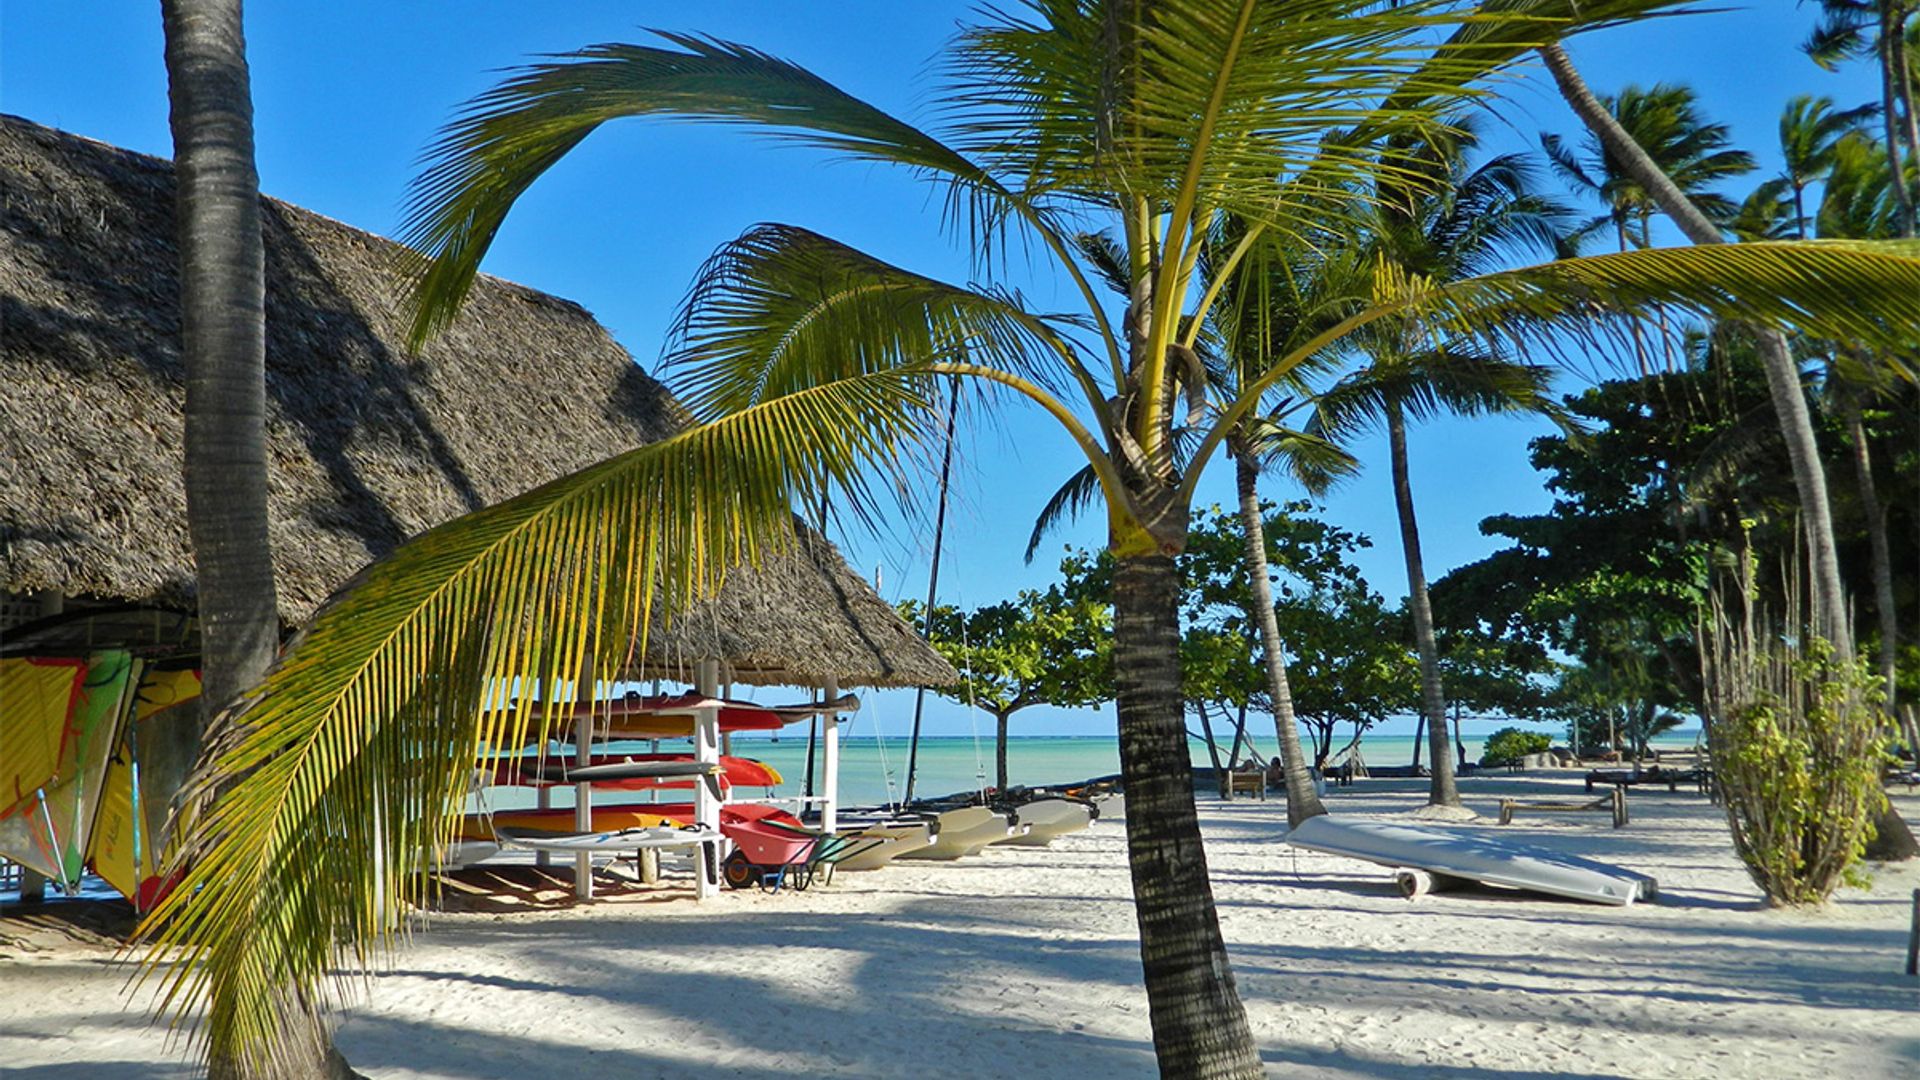 Paste 2022 - Sejur charter plaja Zanzibar, 9 zile